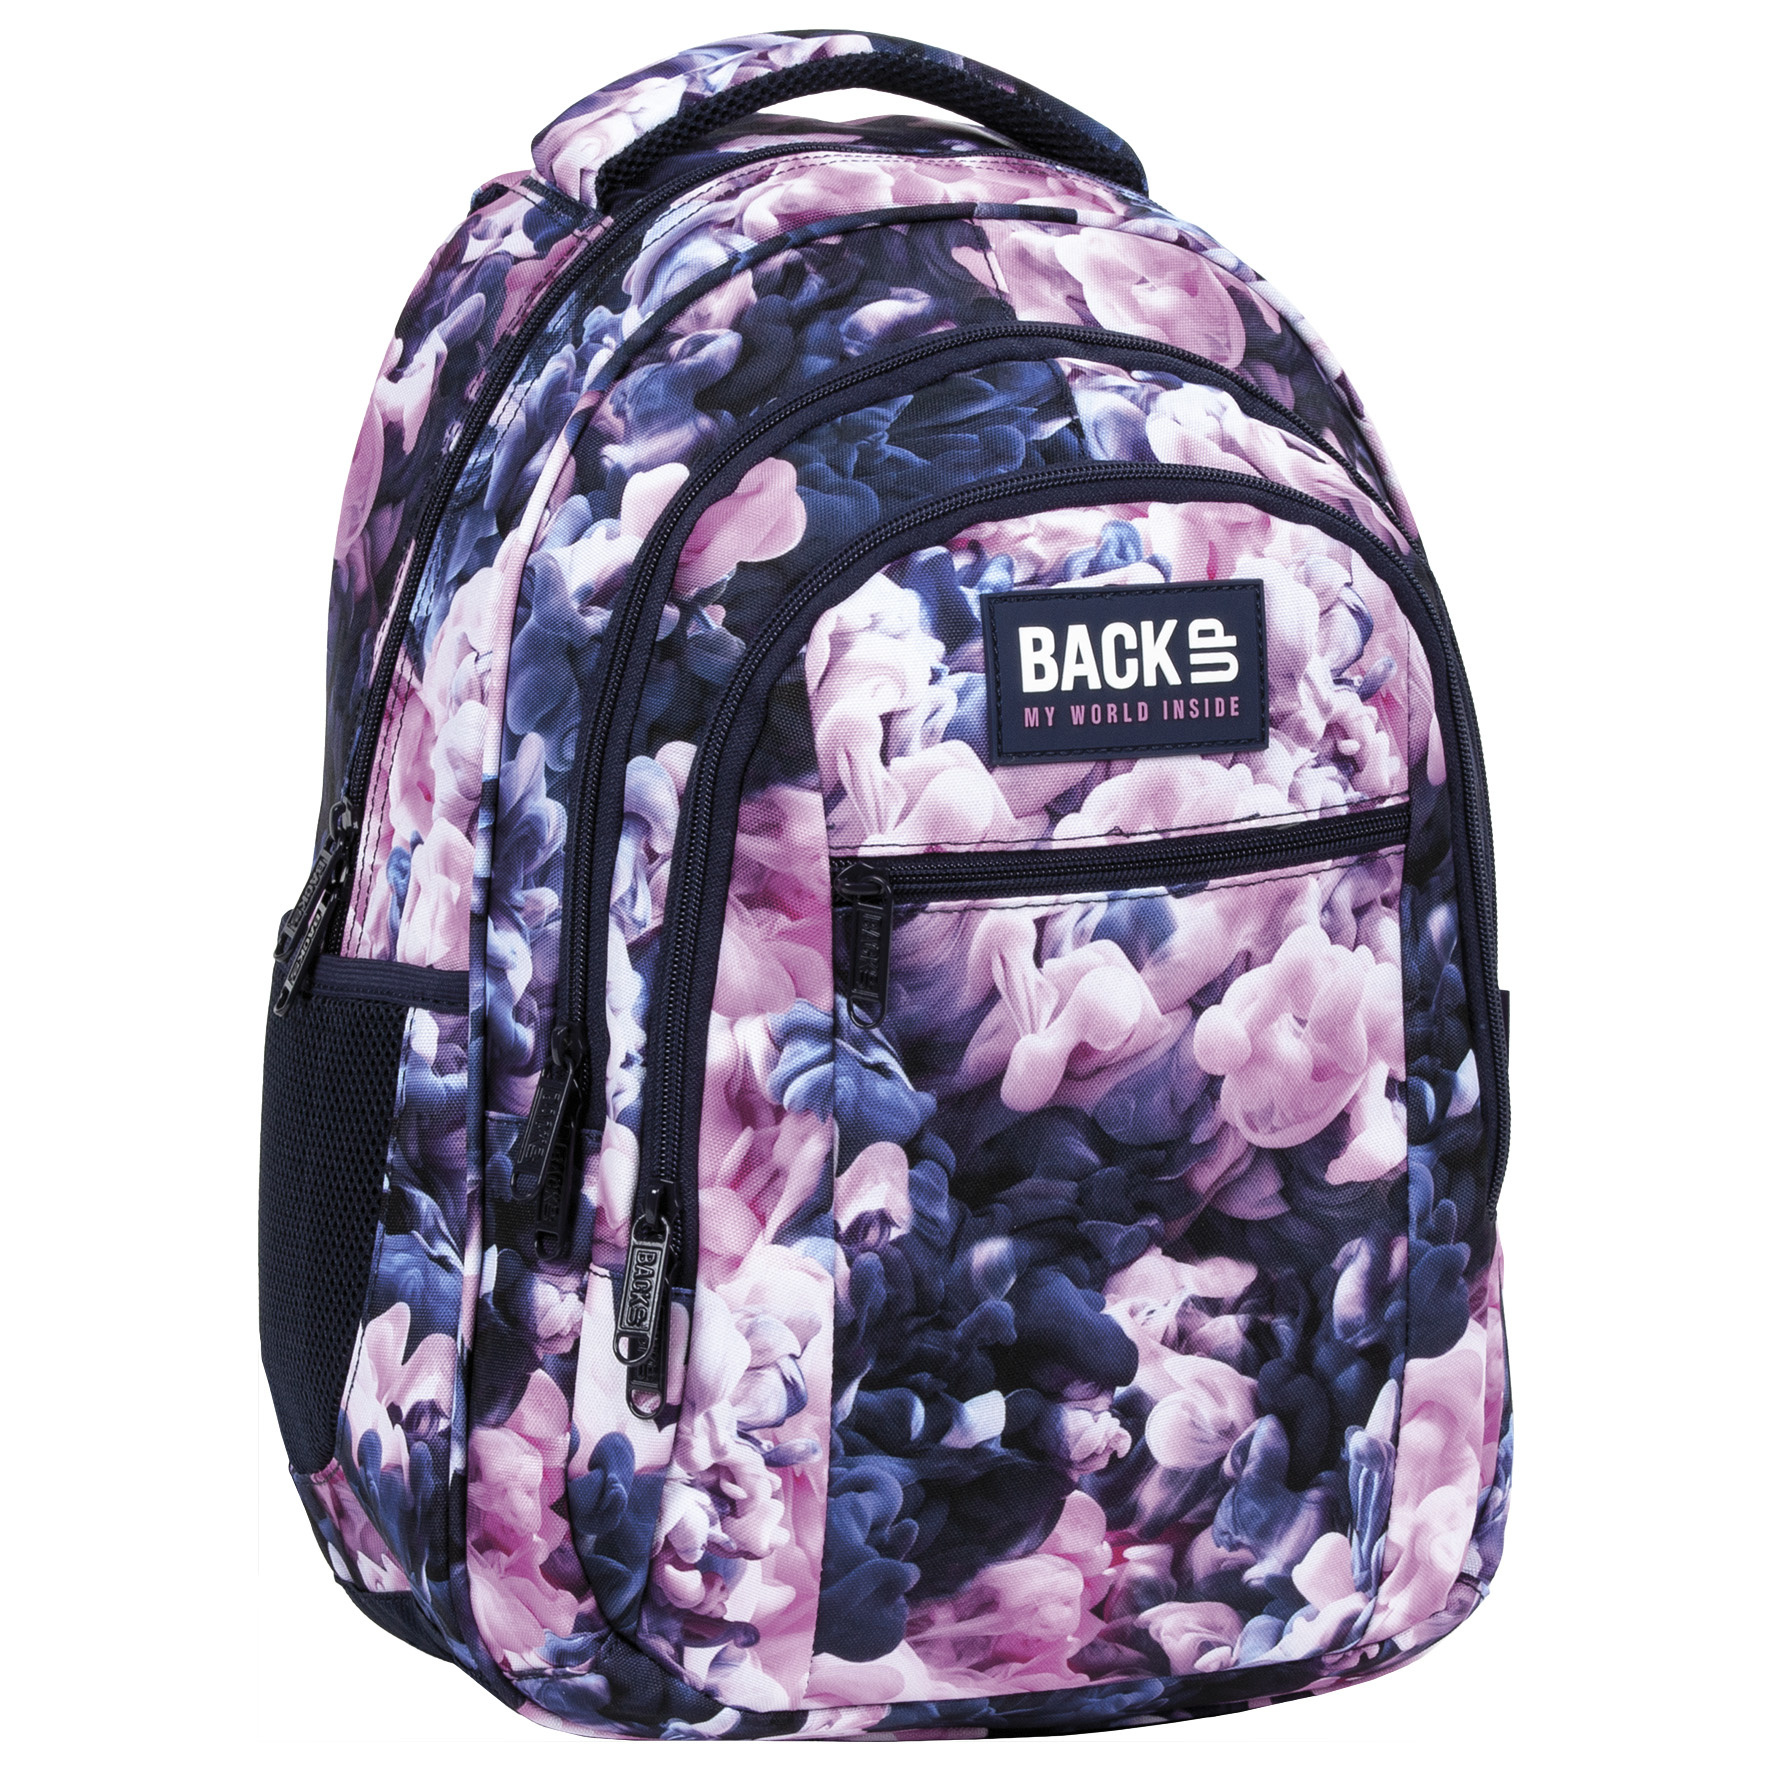 BackUP Backpack, Color - 42 x 30 x 20 cm - Polyester